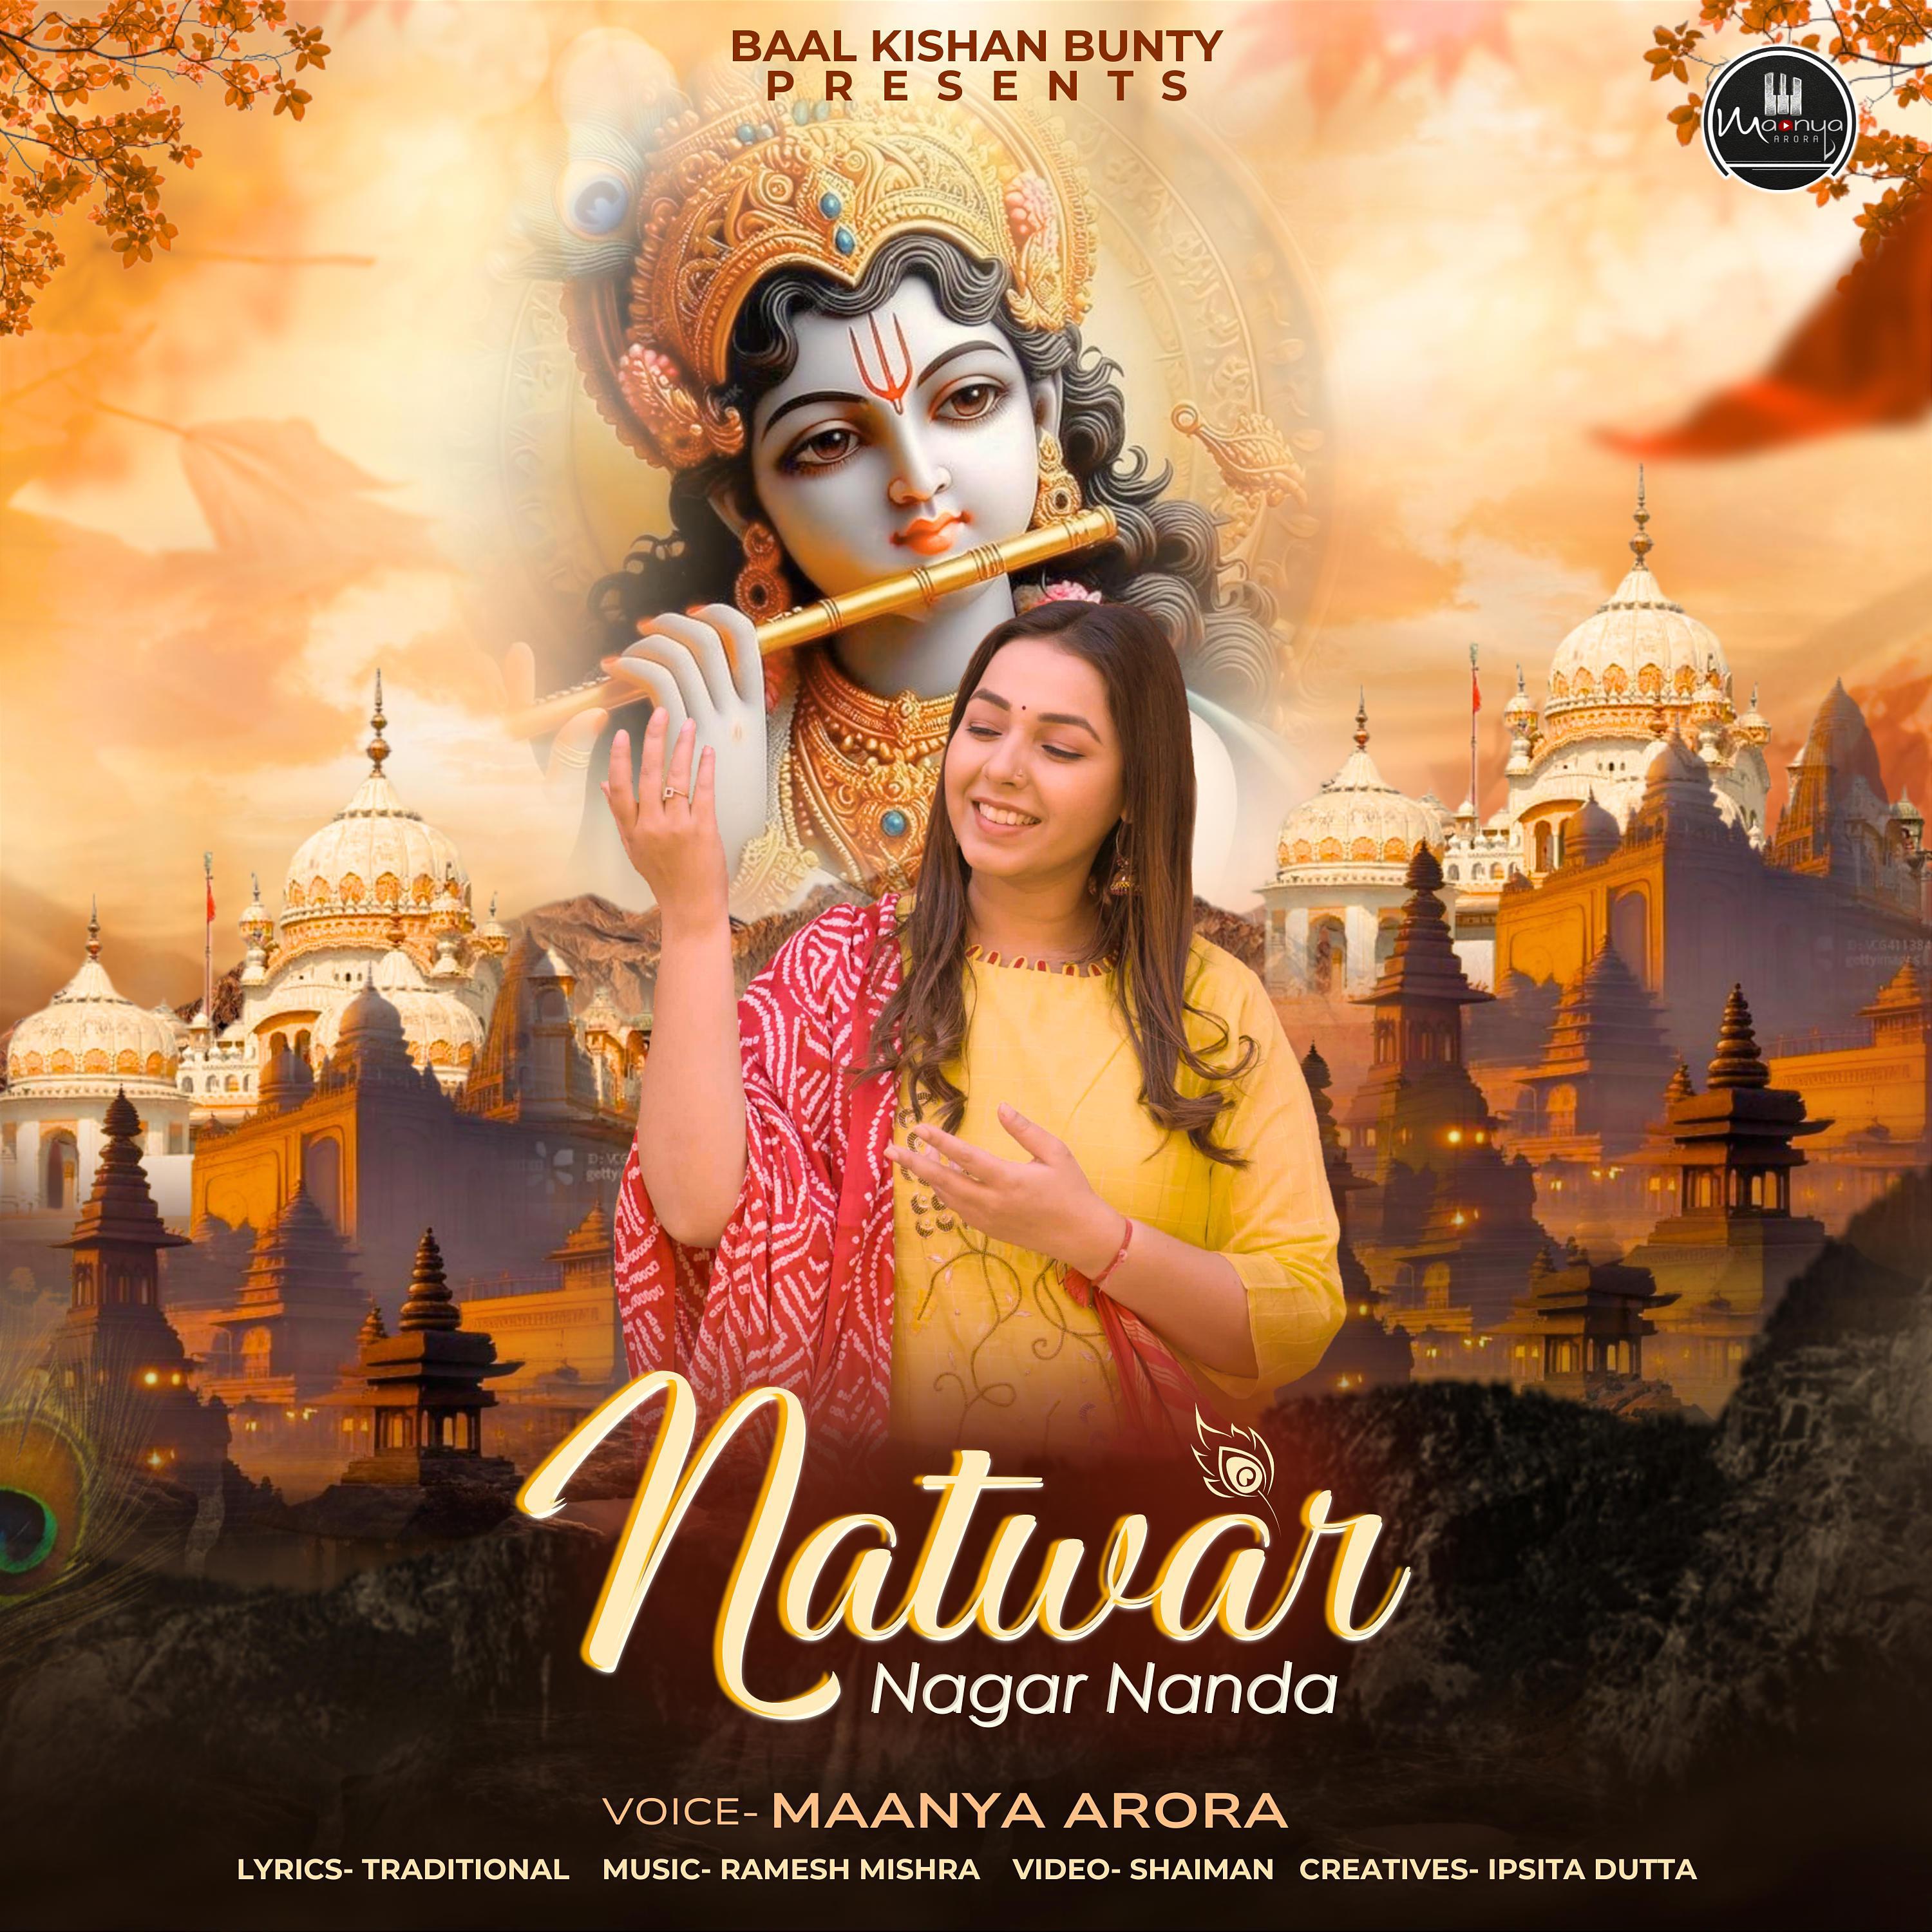 Maanya Arora - Natwar Nagar Nanda